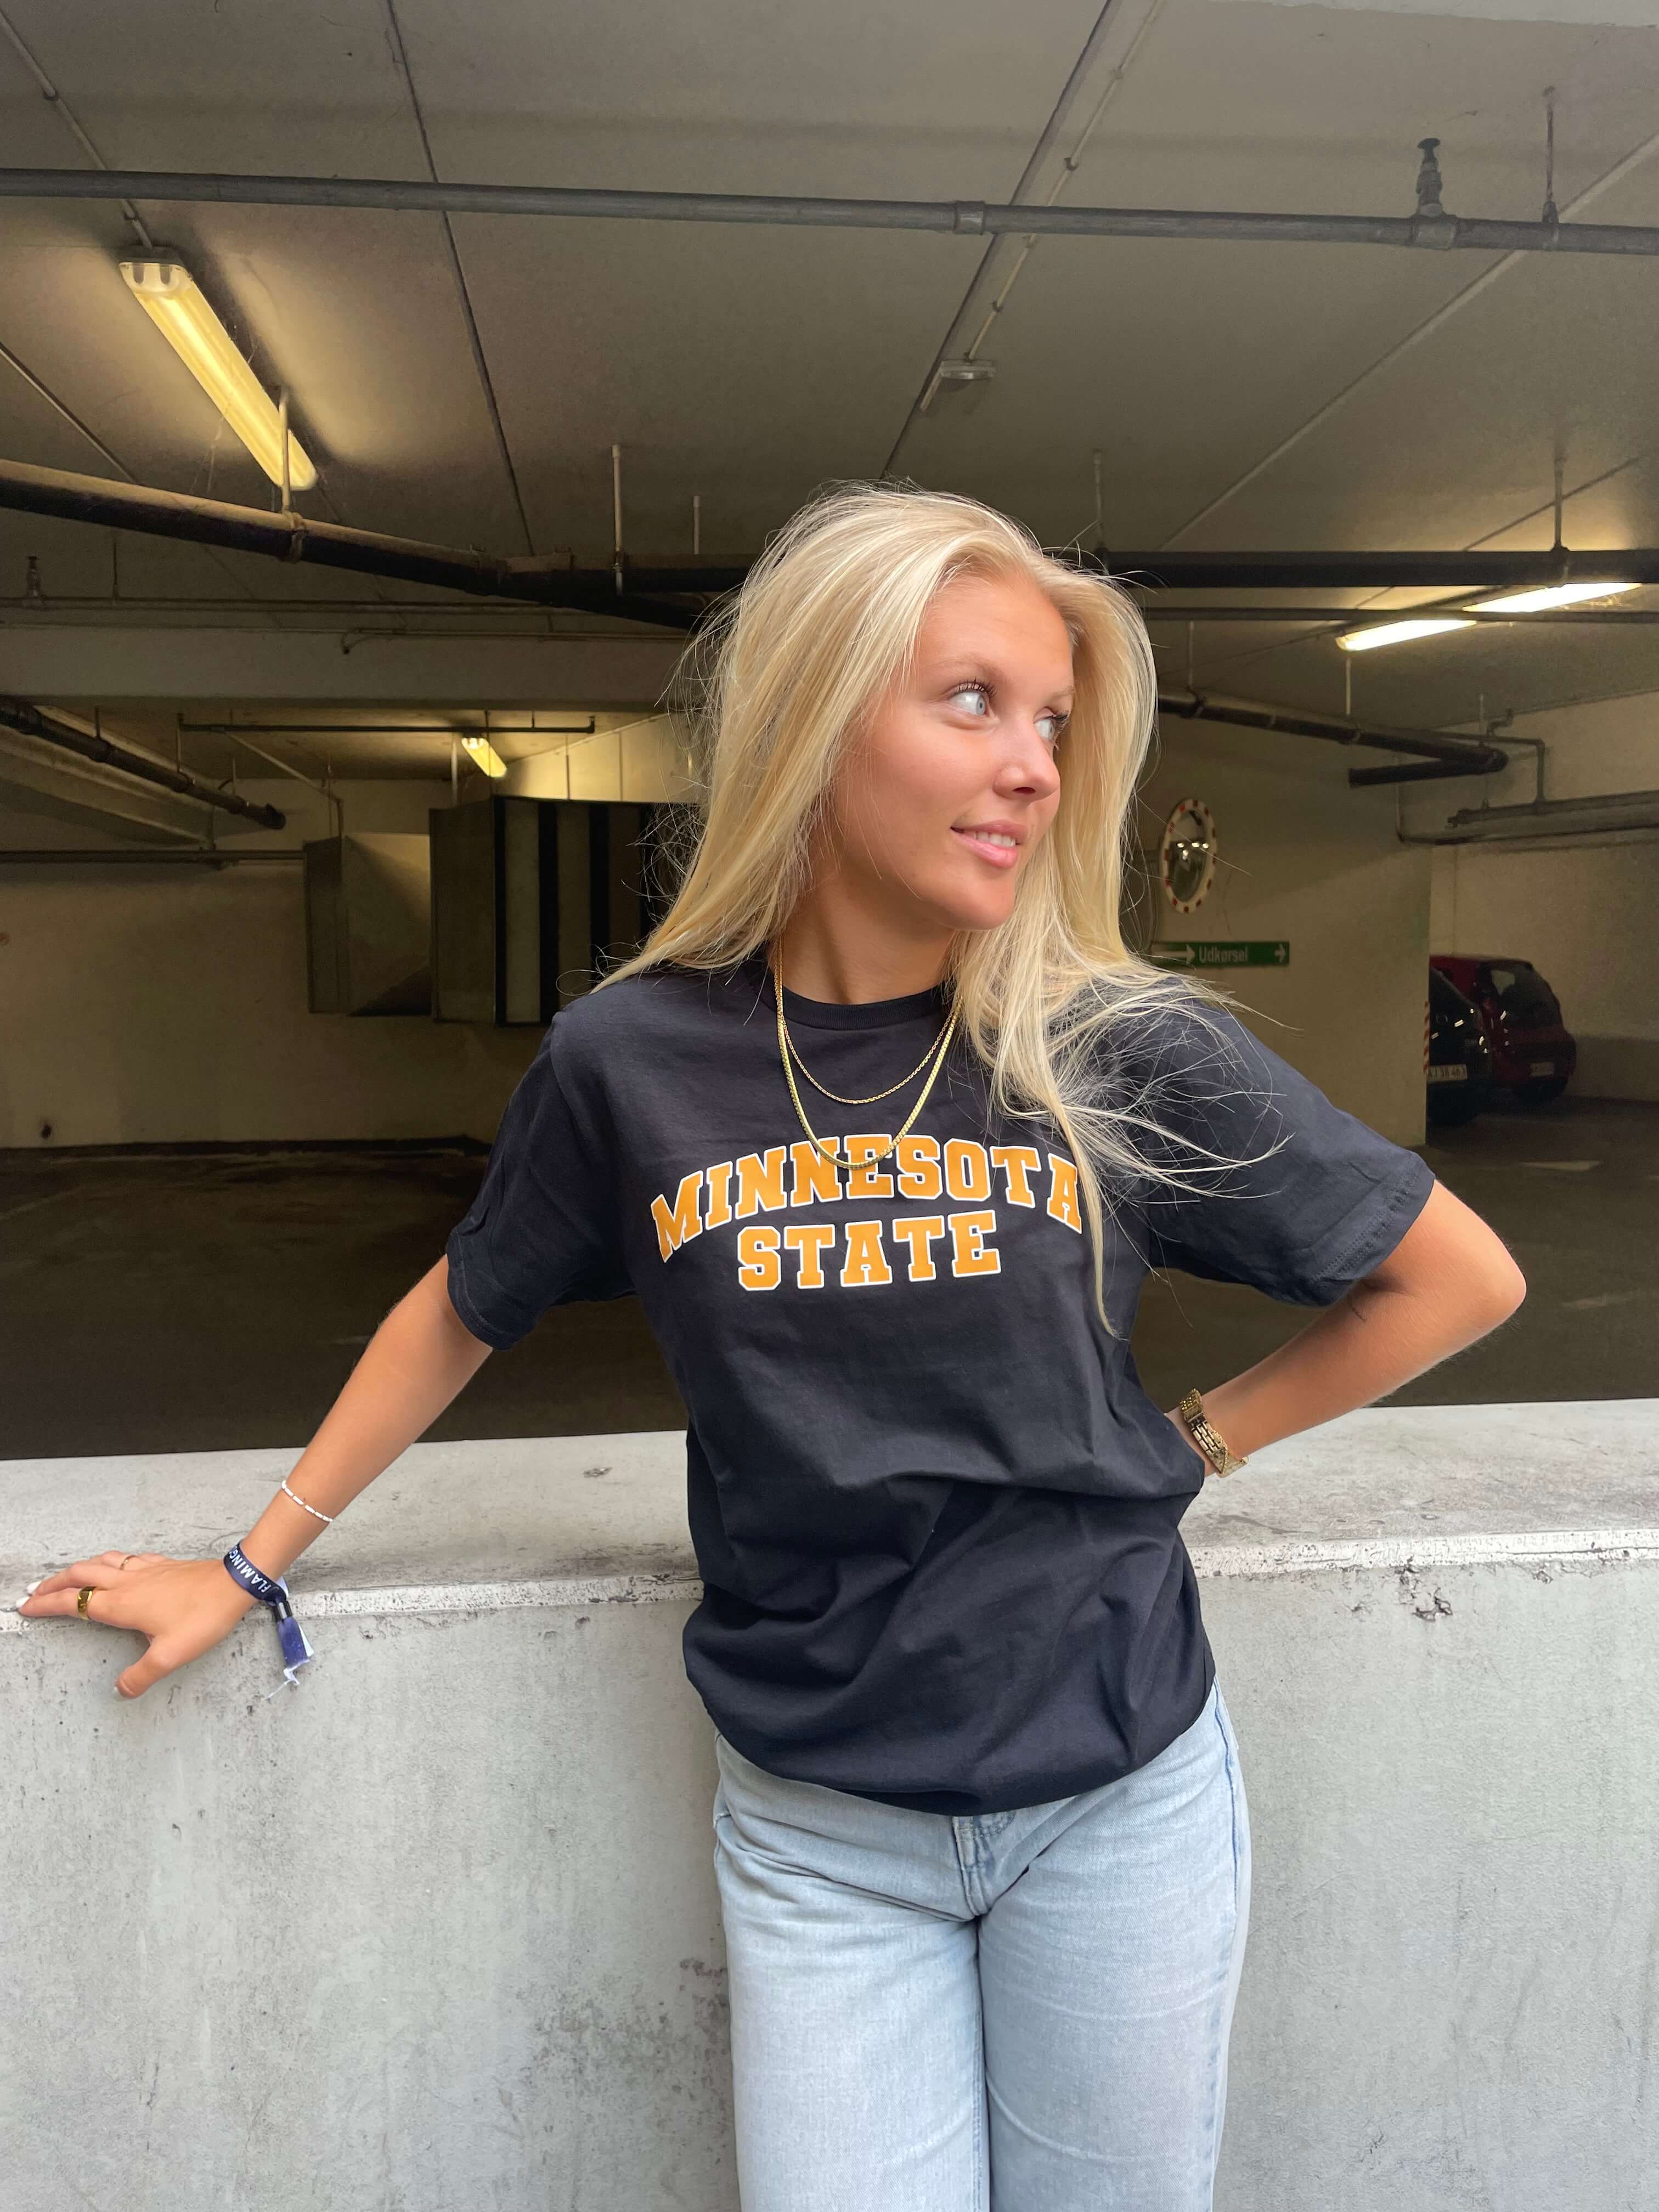 Minnesota State - Sort T-Shirt